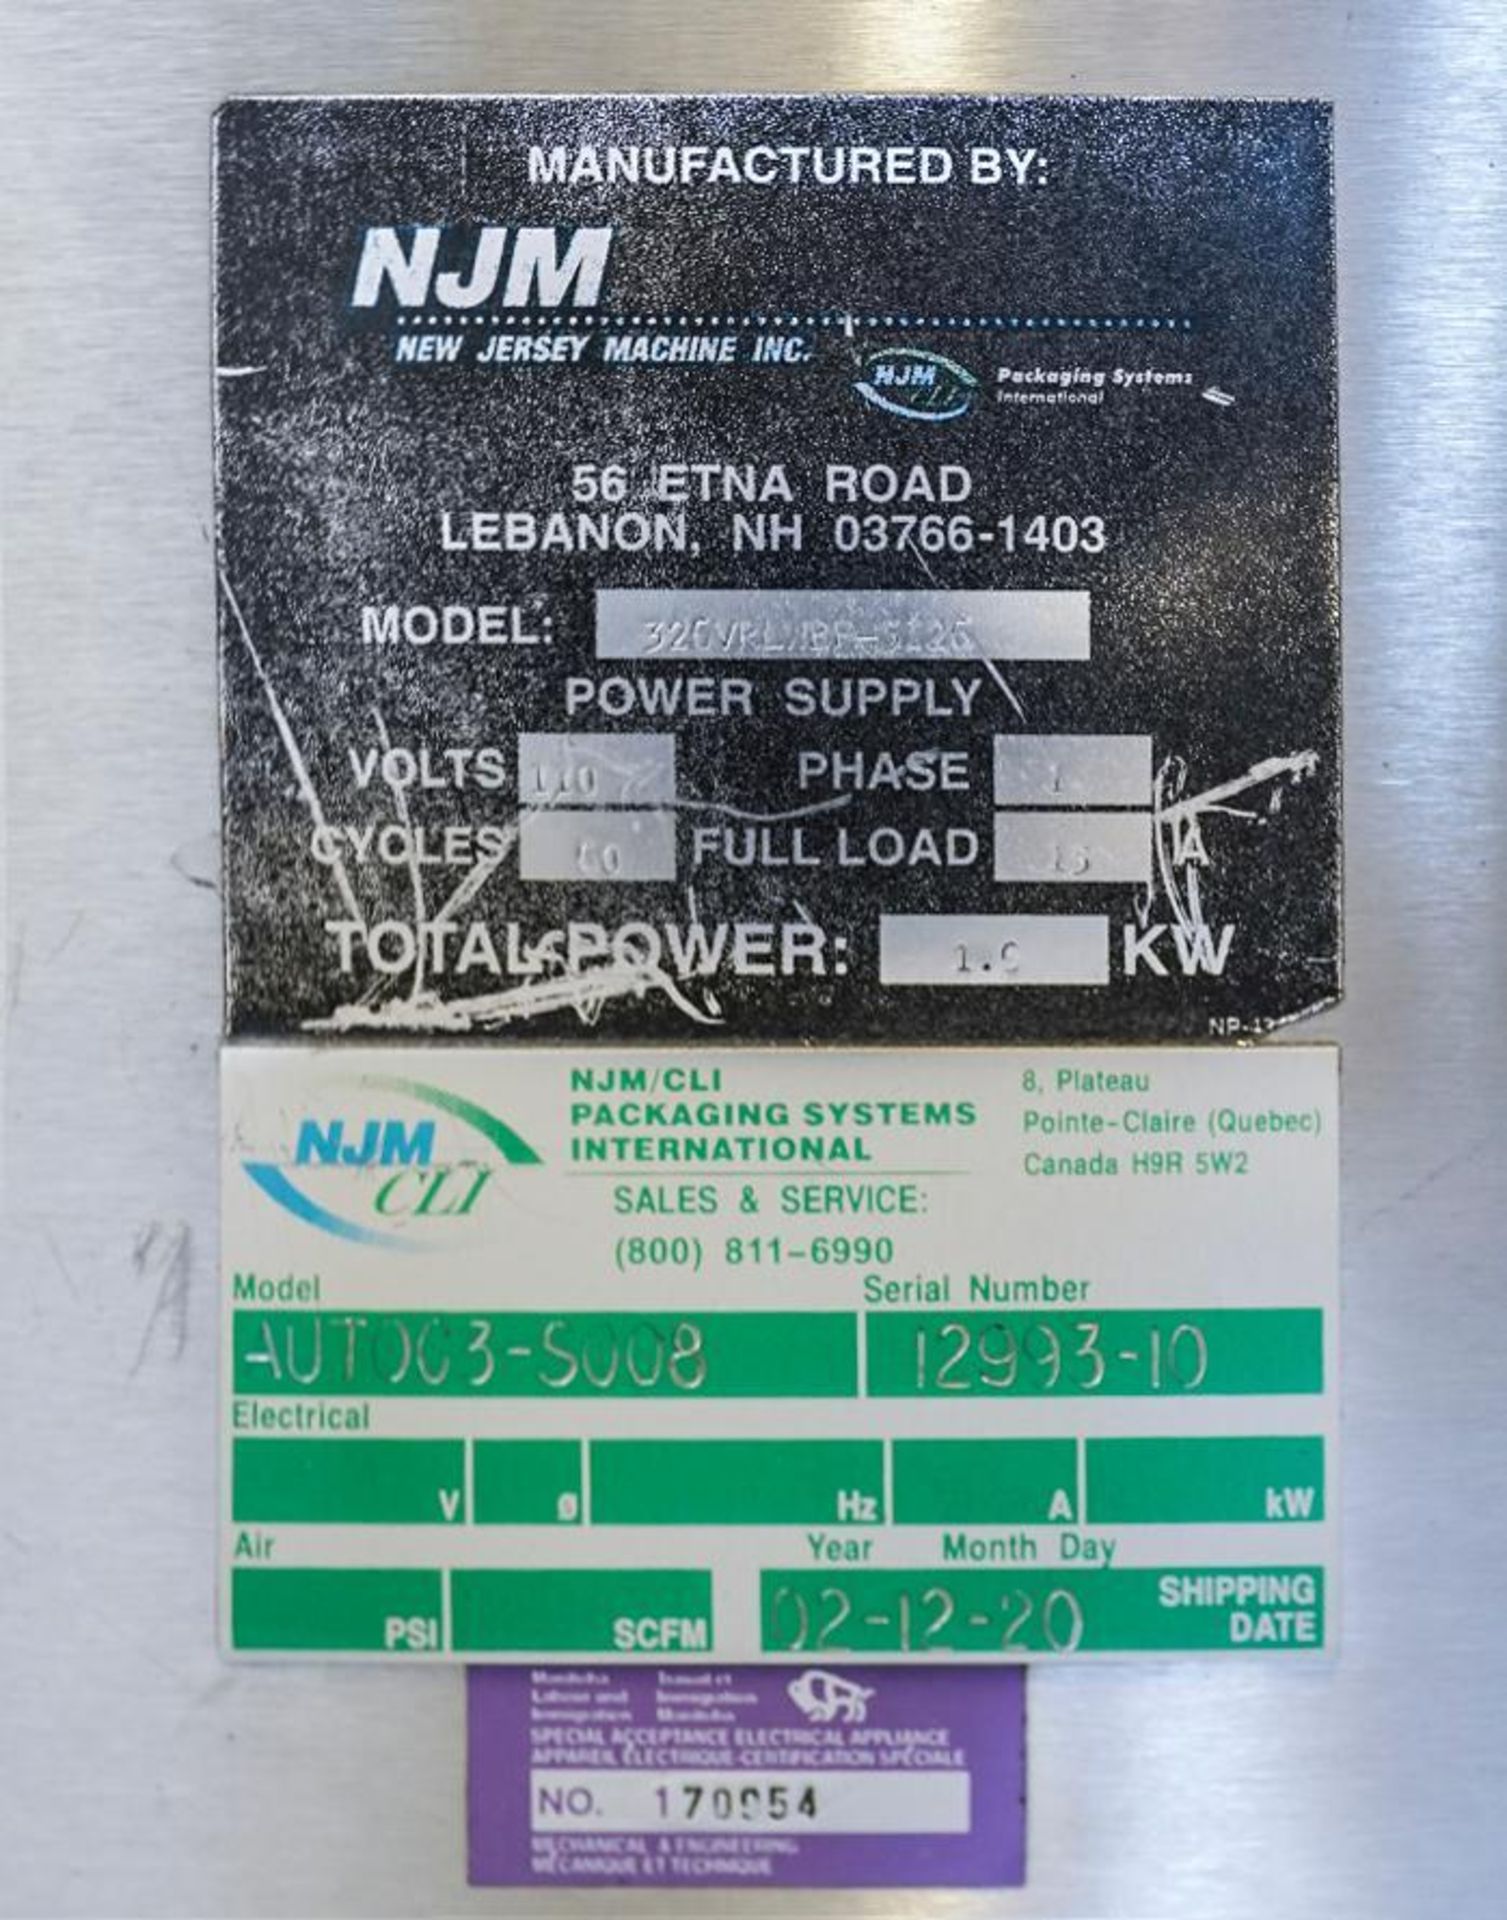 NJM Auto Colt III Labeler - Image 7 of 19